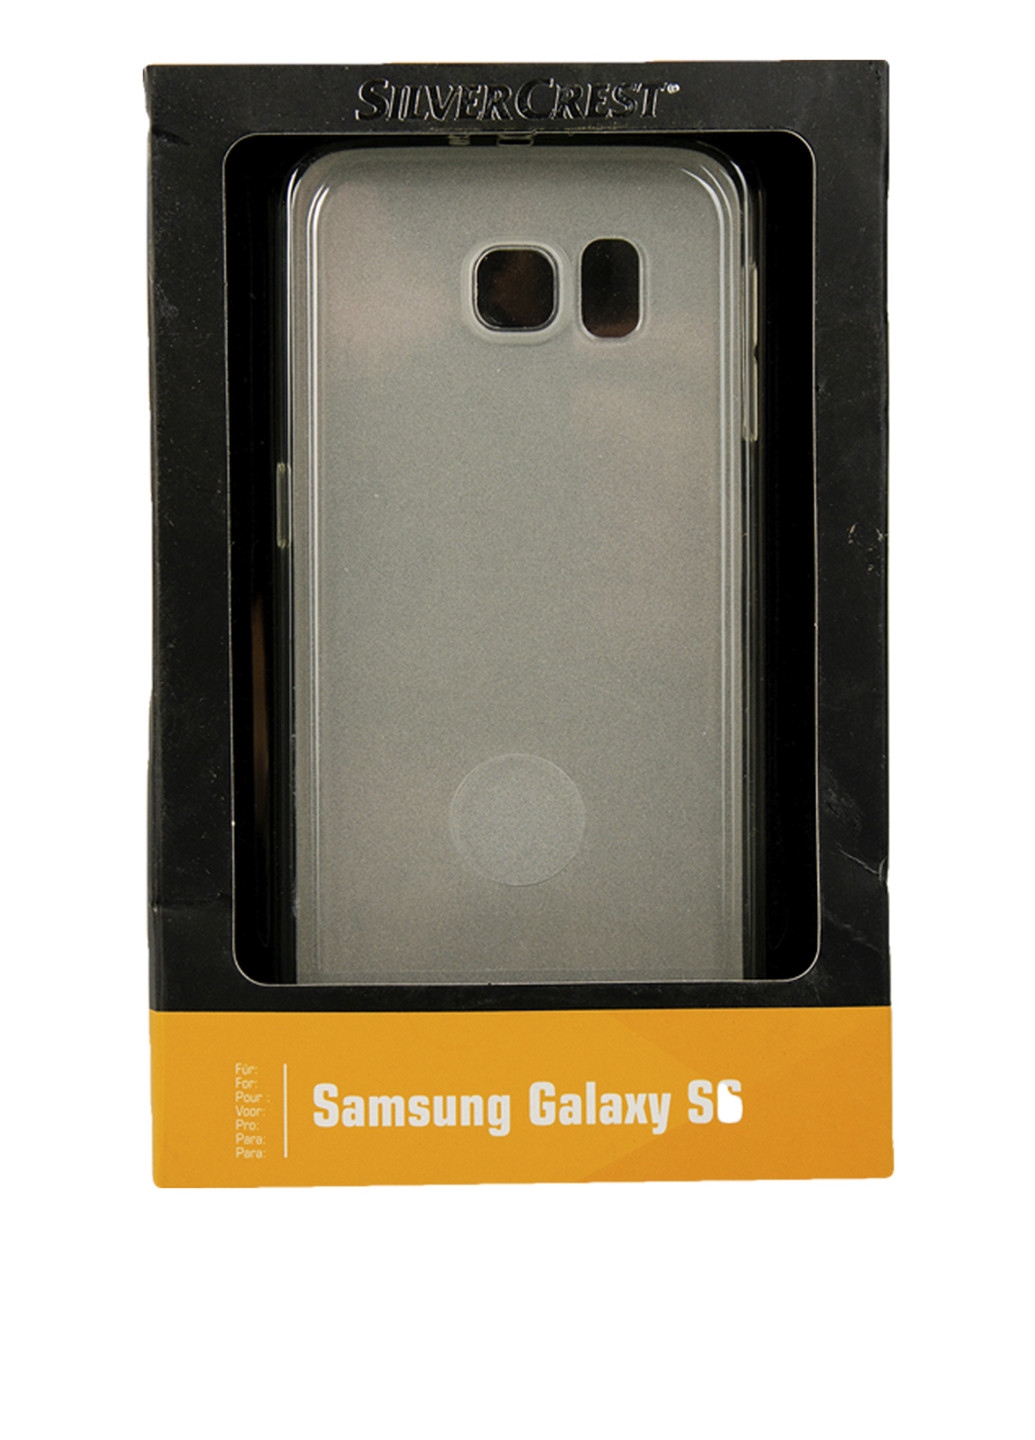 Чехол на Samsung Galaxy S6 Silver Crest прозрачный